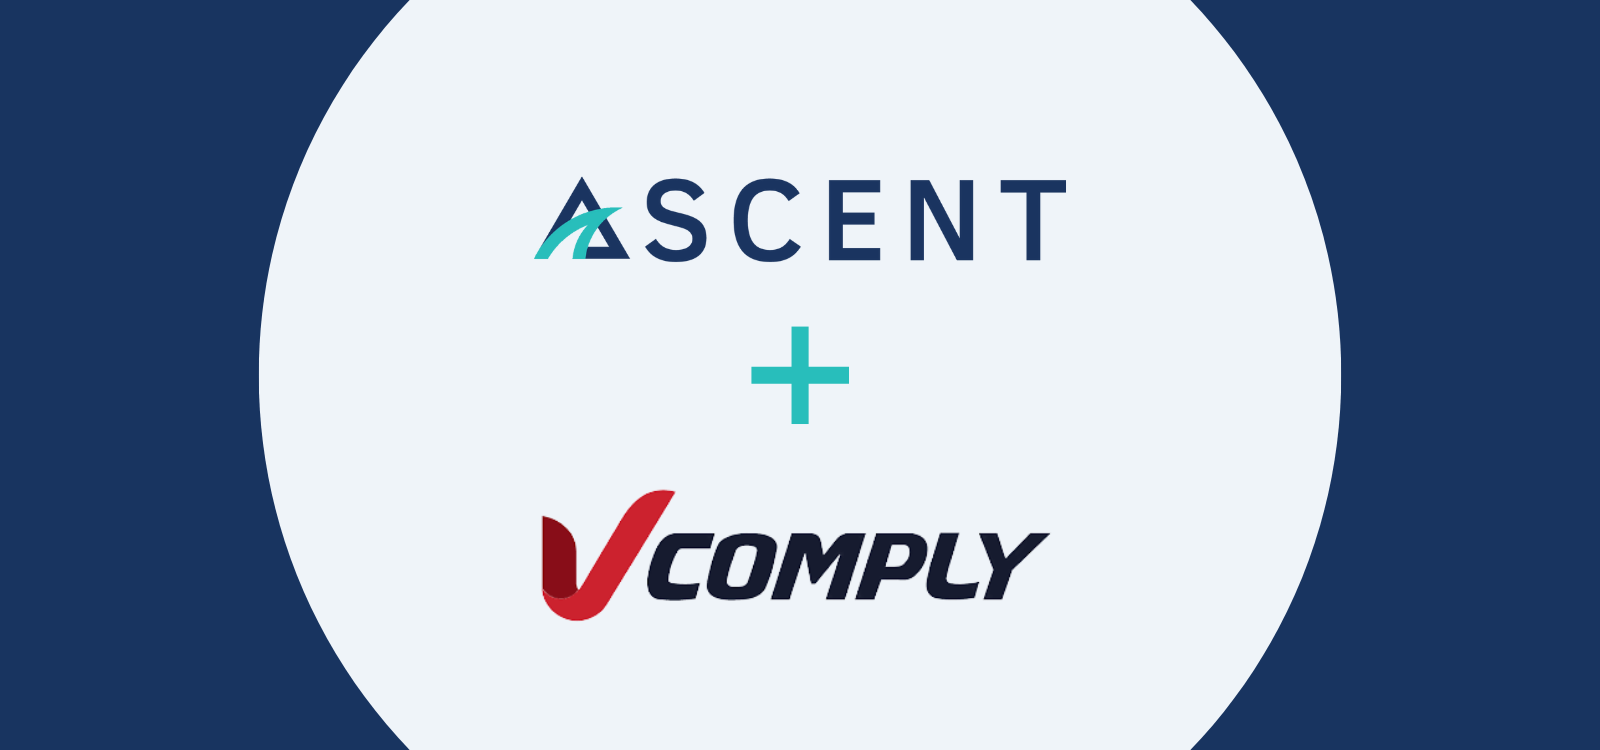 Press Release | Ascent RegTech & VComply Partnership